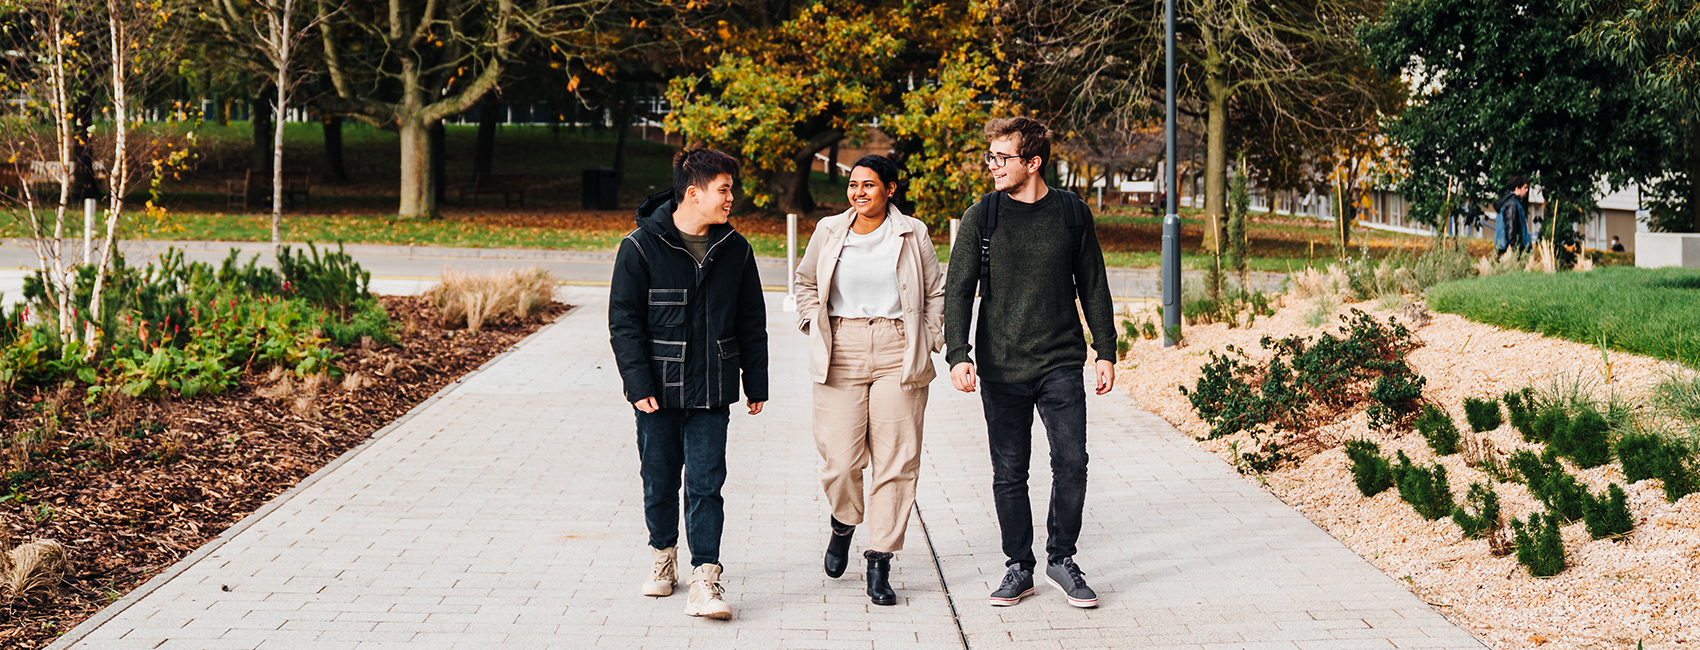 three economics students walking on campus